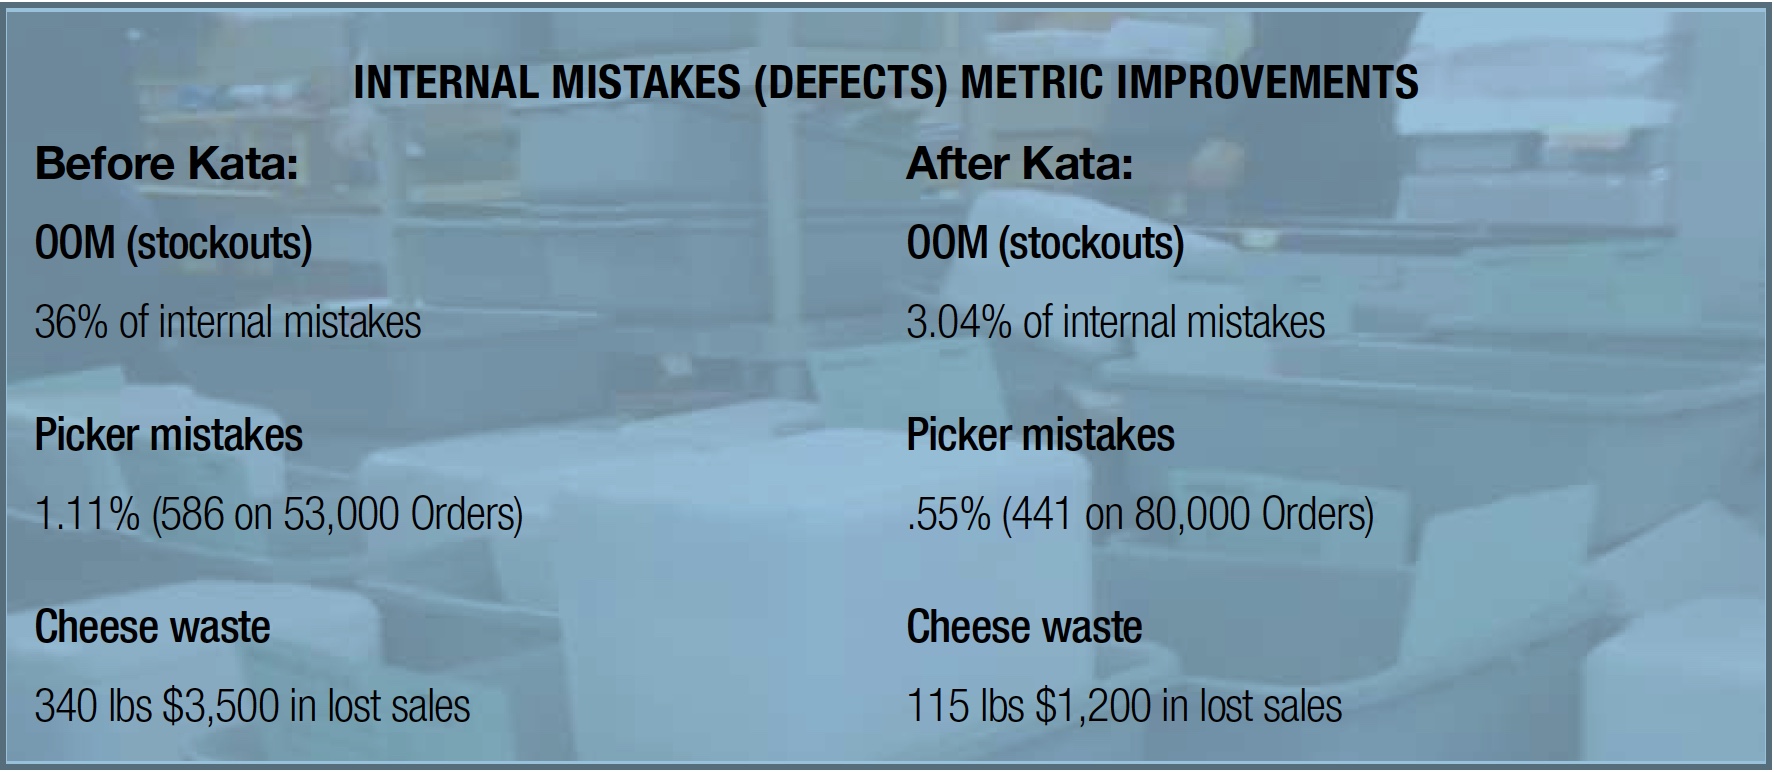 Internal Mistakes Metric Improvements - Zingerman's 